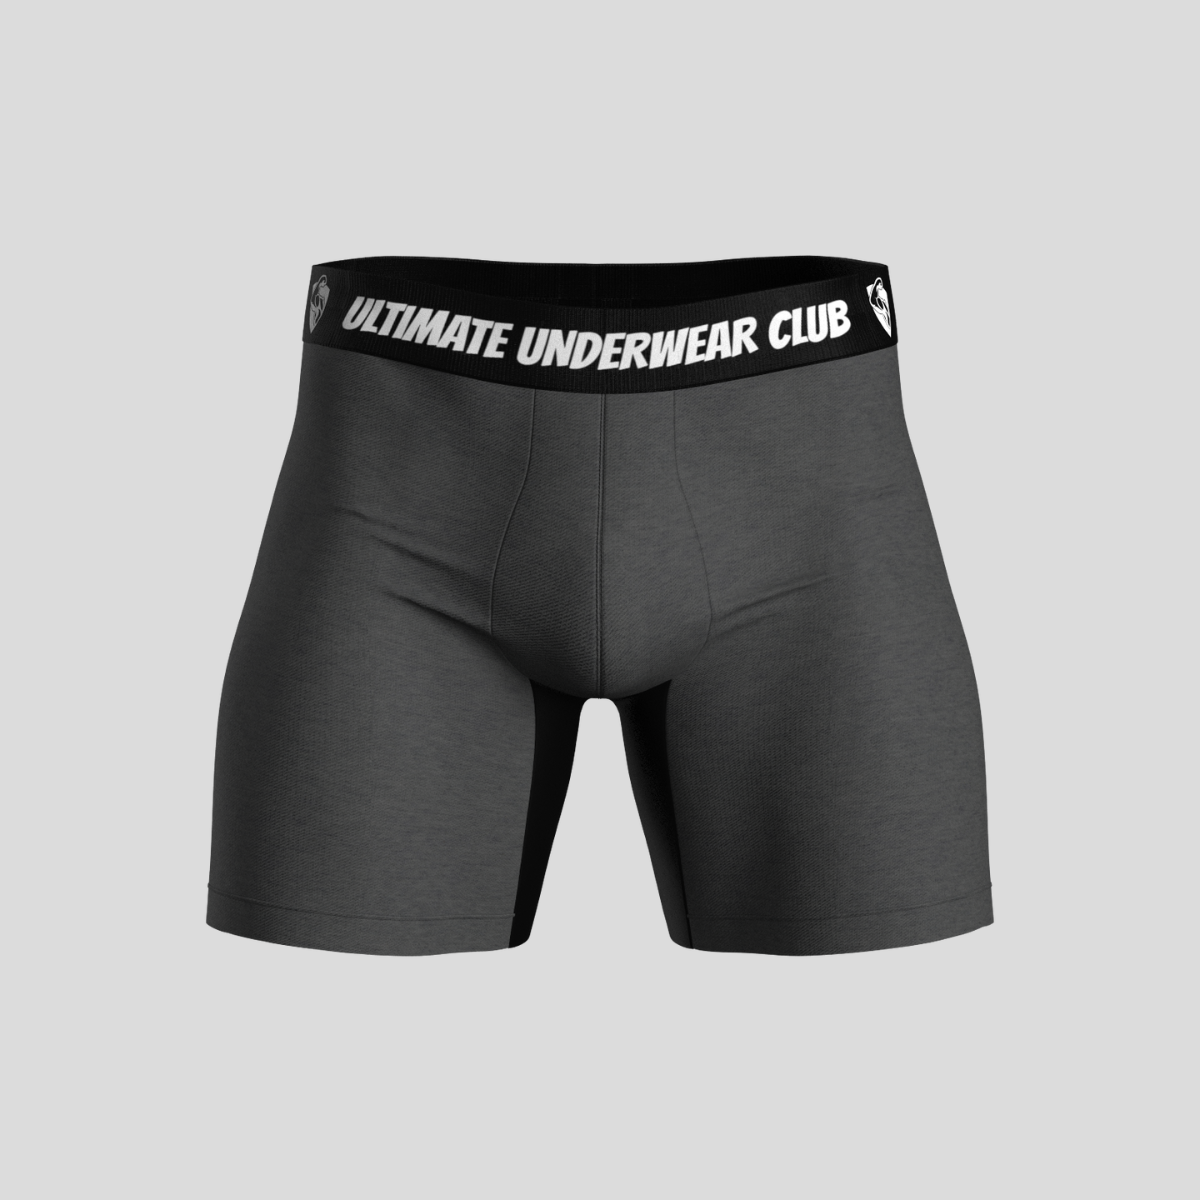 Grey Bamboo Boxer Brief Underwear for Men